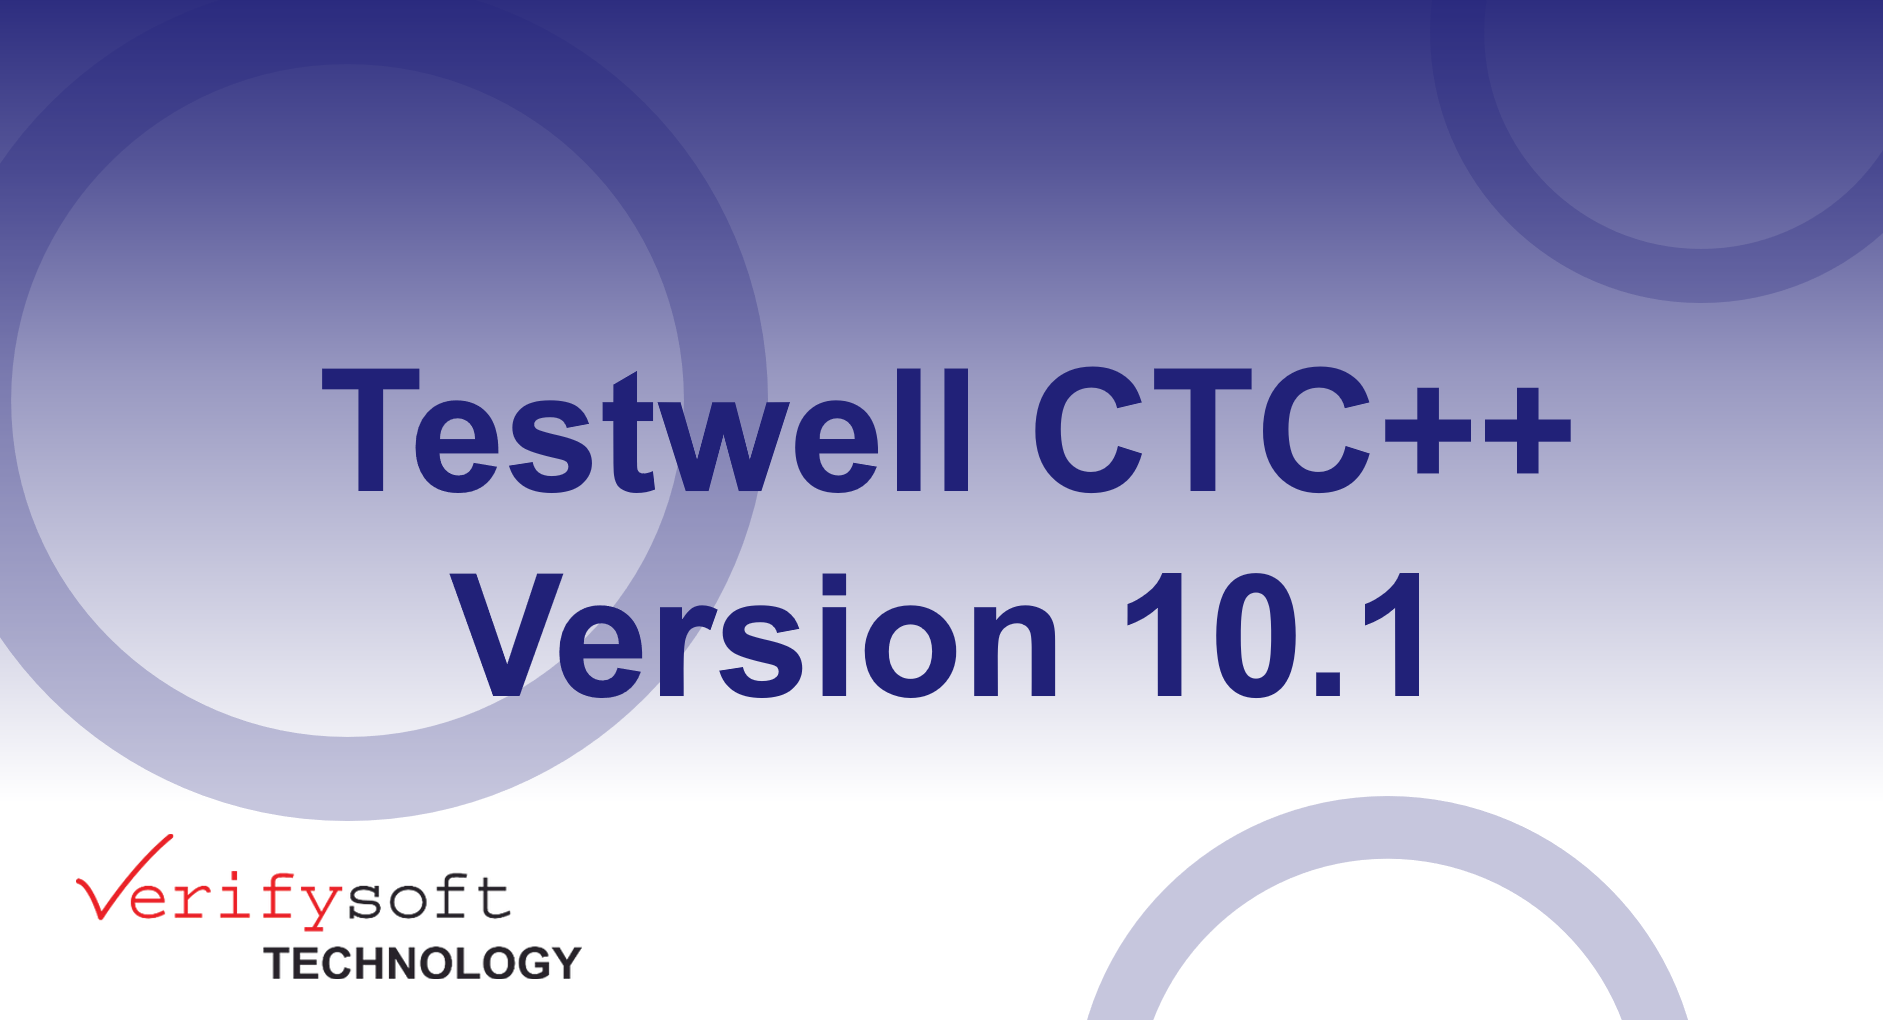 Webinar Testwell CTC++ Version 10.1